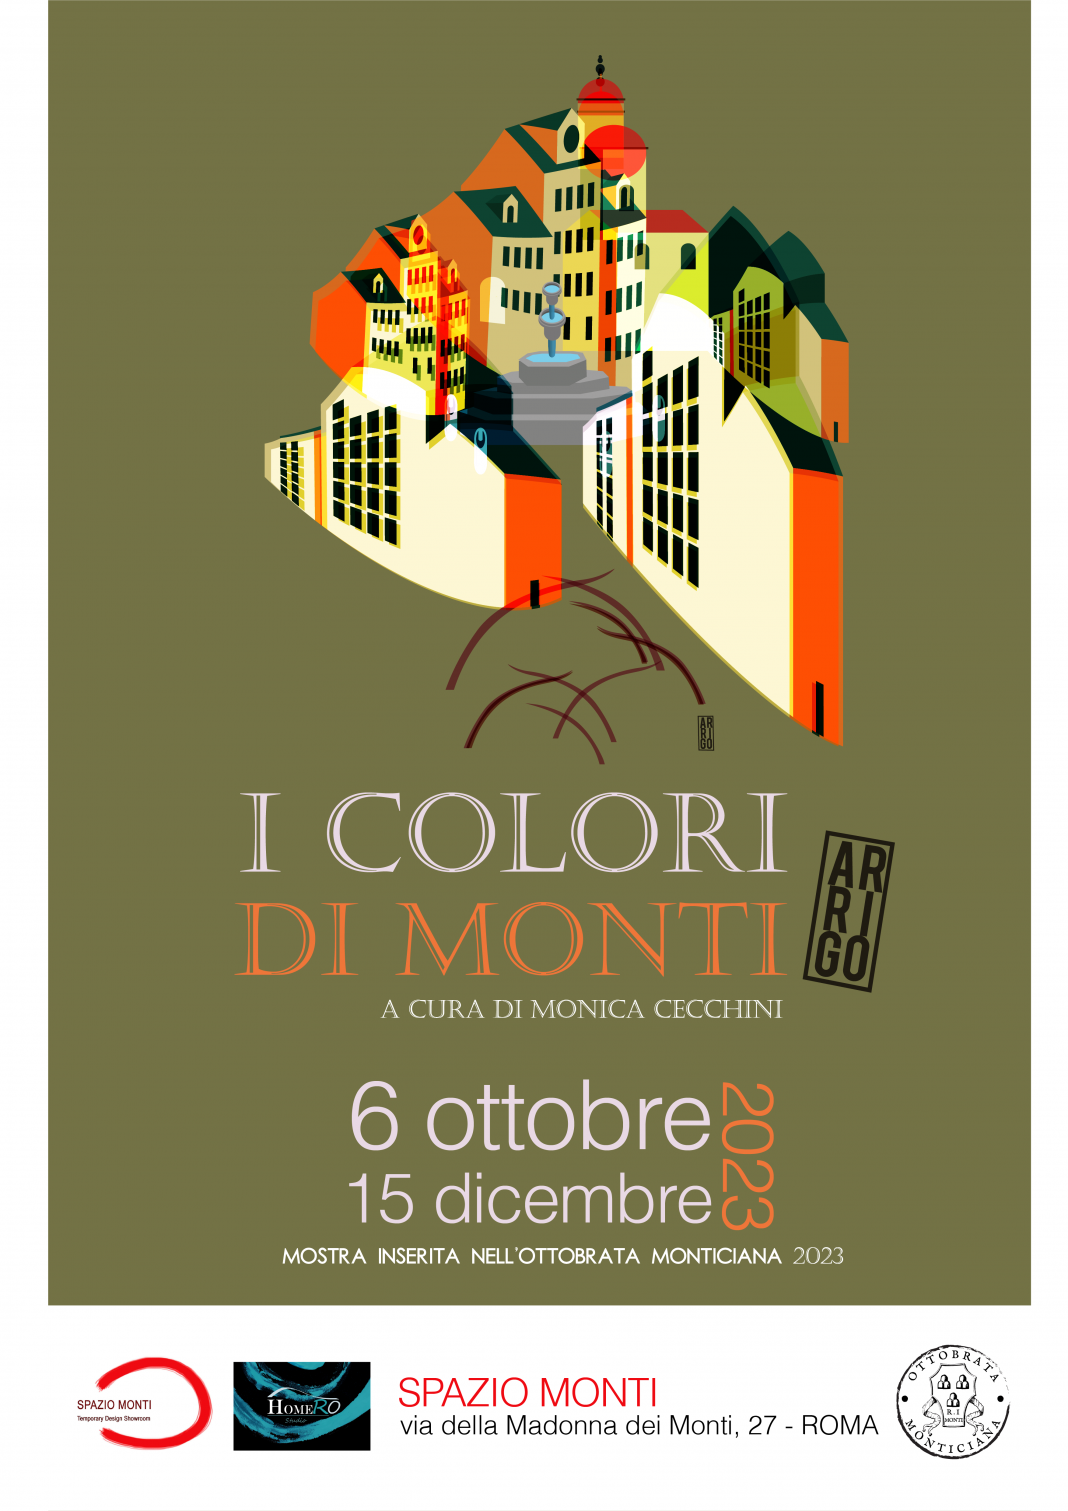 I COLORI DI MONTIhttps://www.exibart.com/repository/media/formidable/11/img/cdf/A3-I-colori-di-monti-Alessandro-Arrigo-1068x1511.png